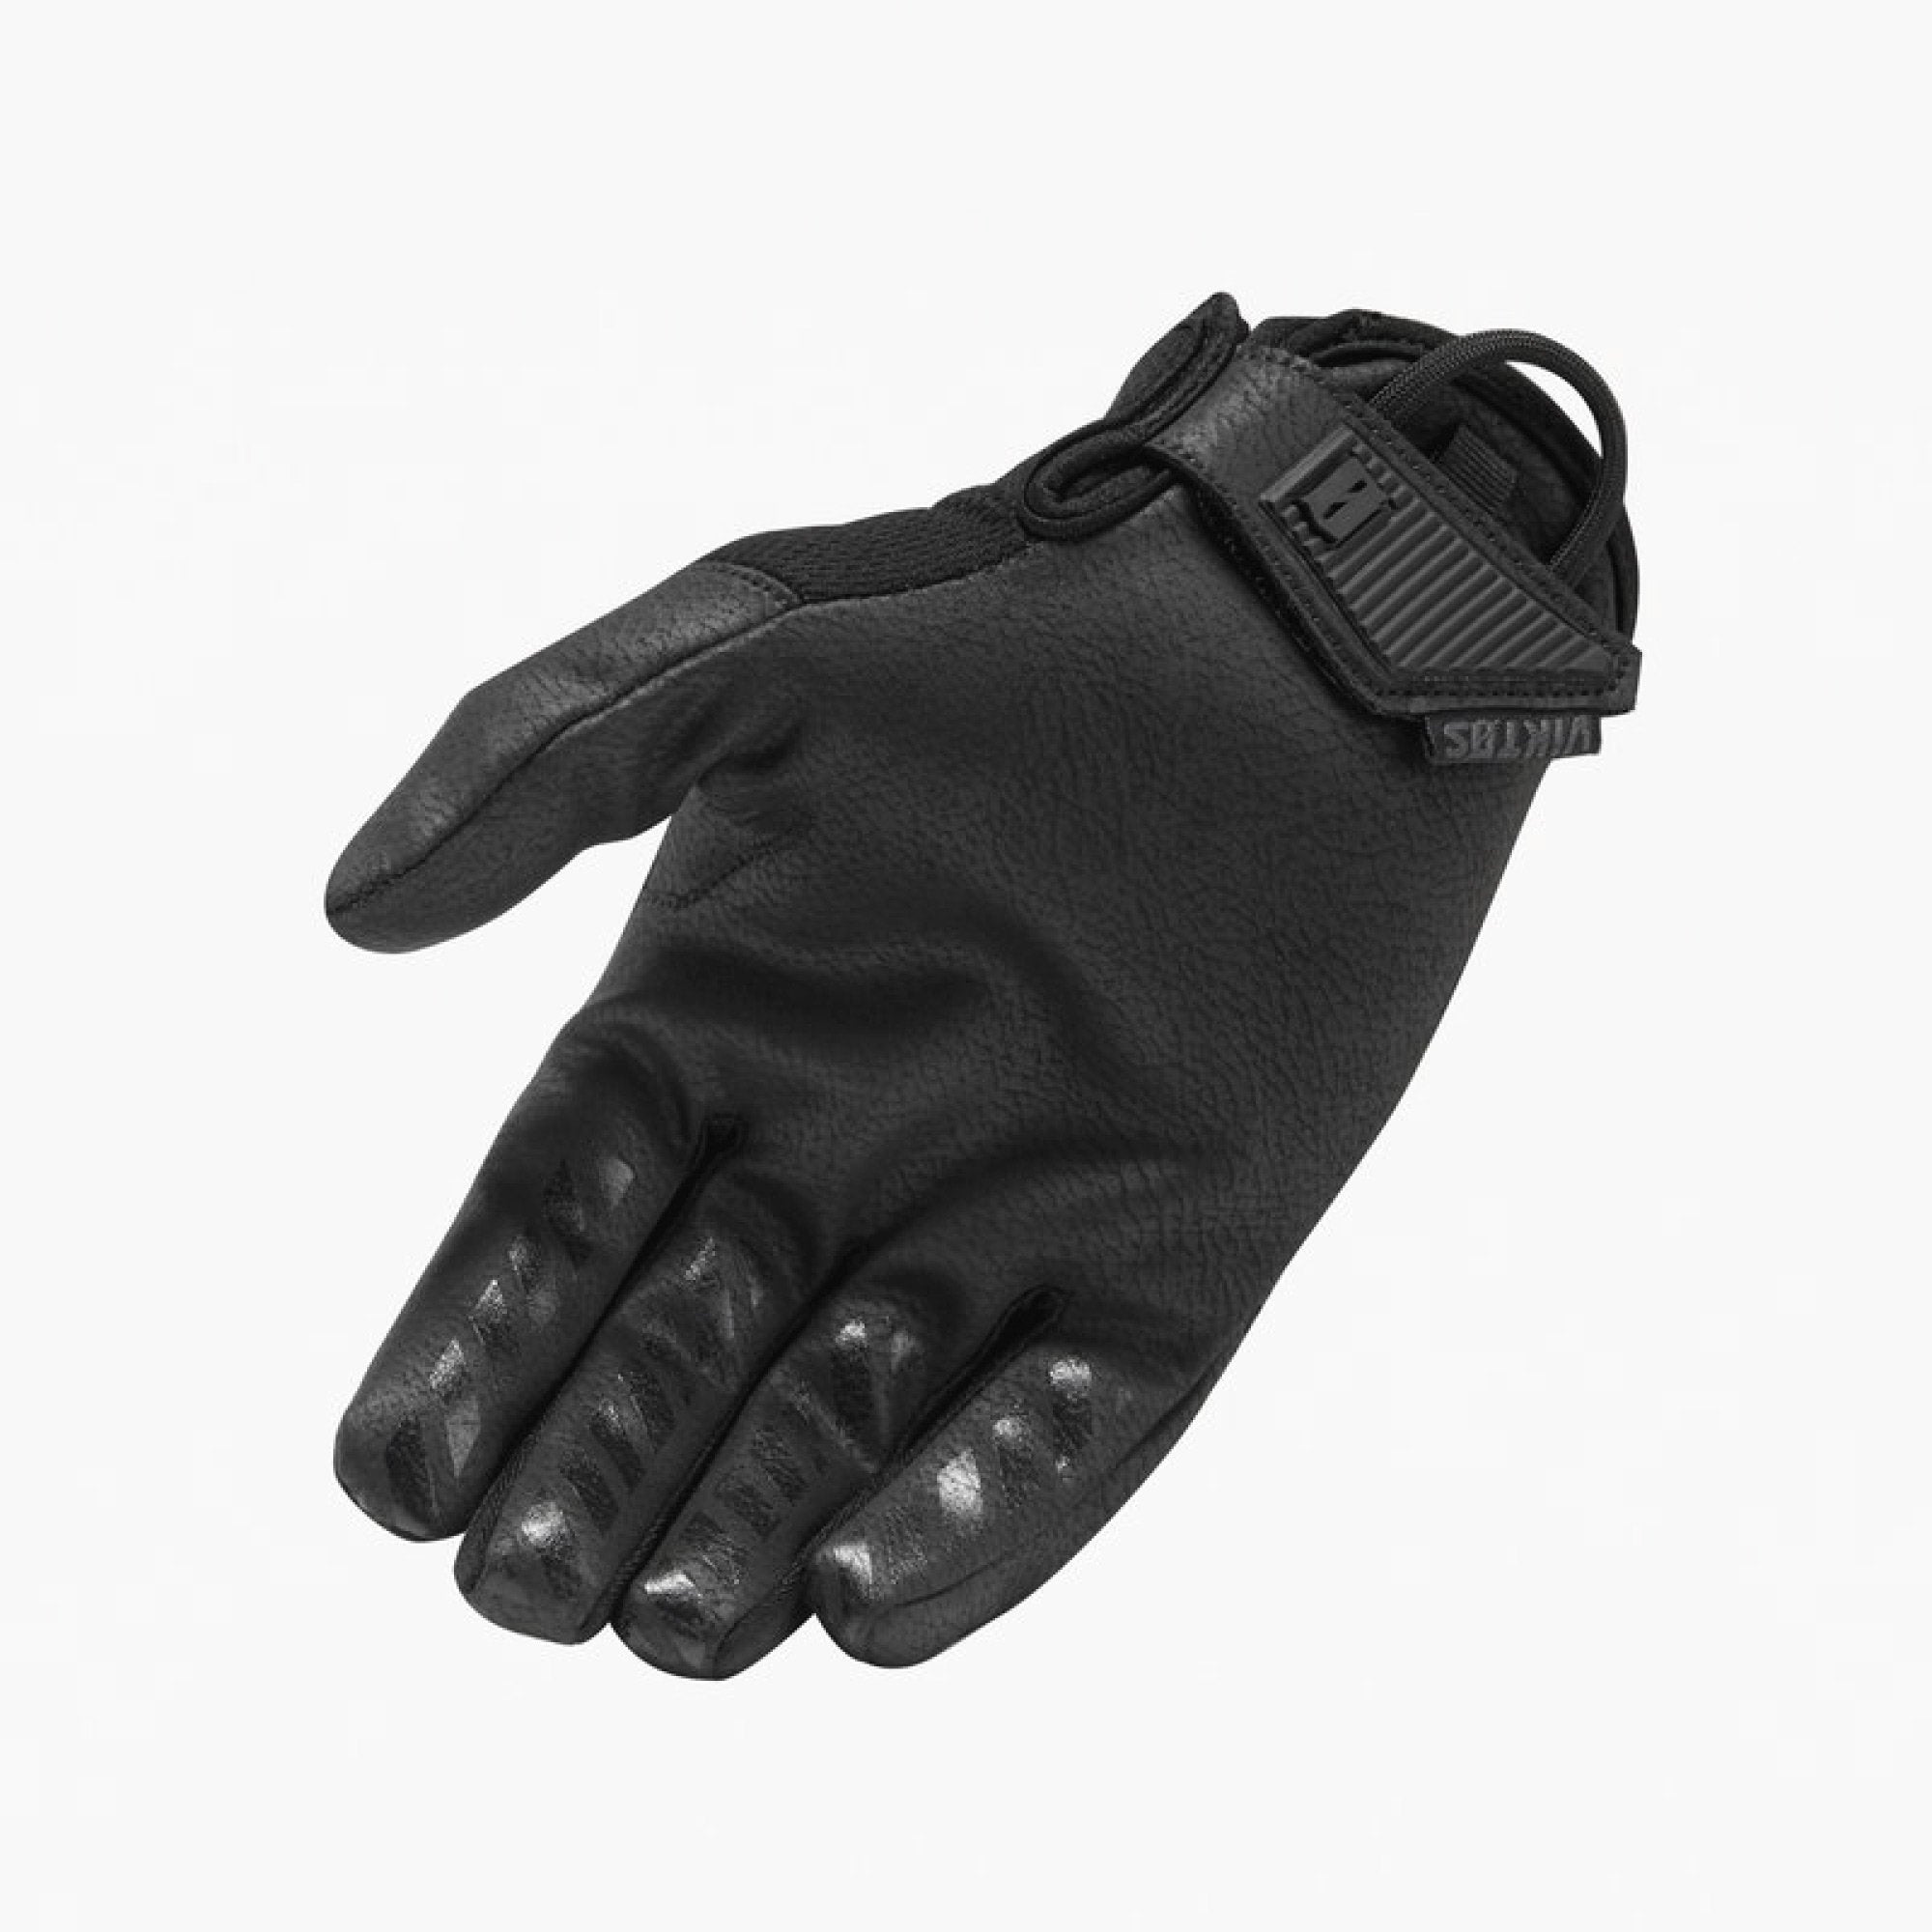 VIKTOS LEO Vented Duty Gloves Nightfjall Gloves VIKTOS Small Tactical Gear Supplier Tactical Distributors Australia